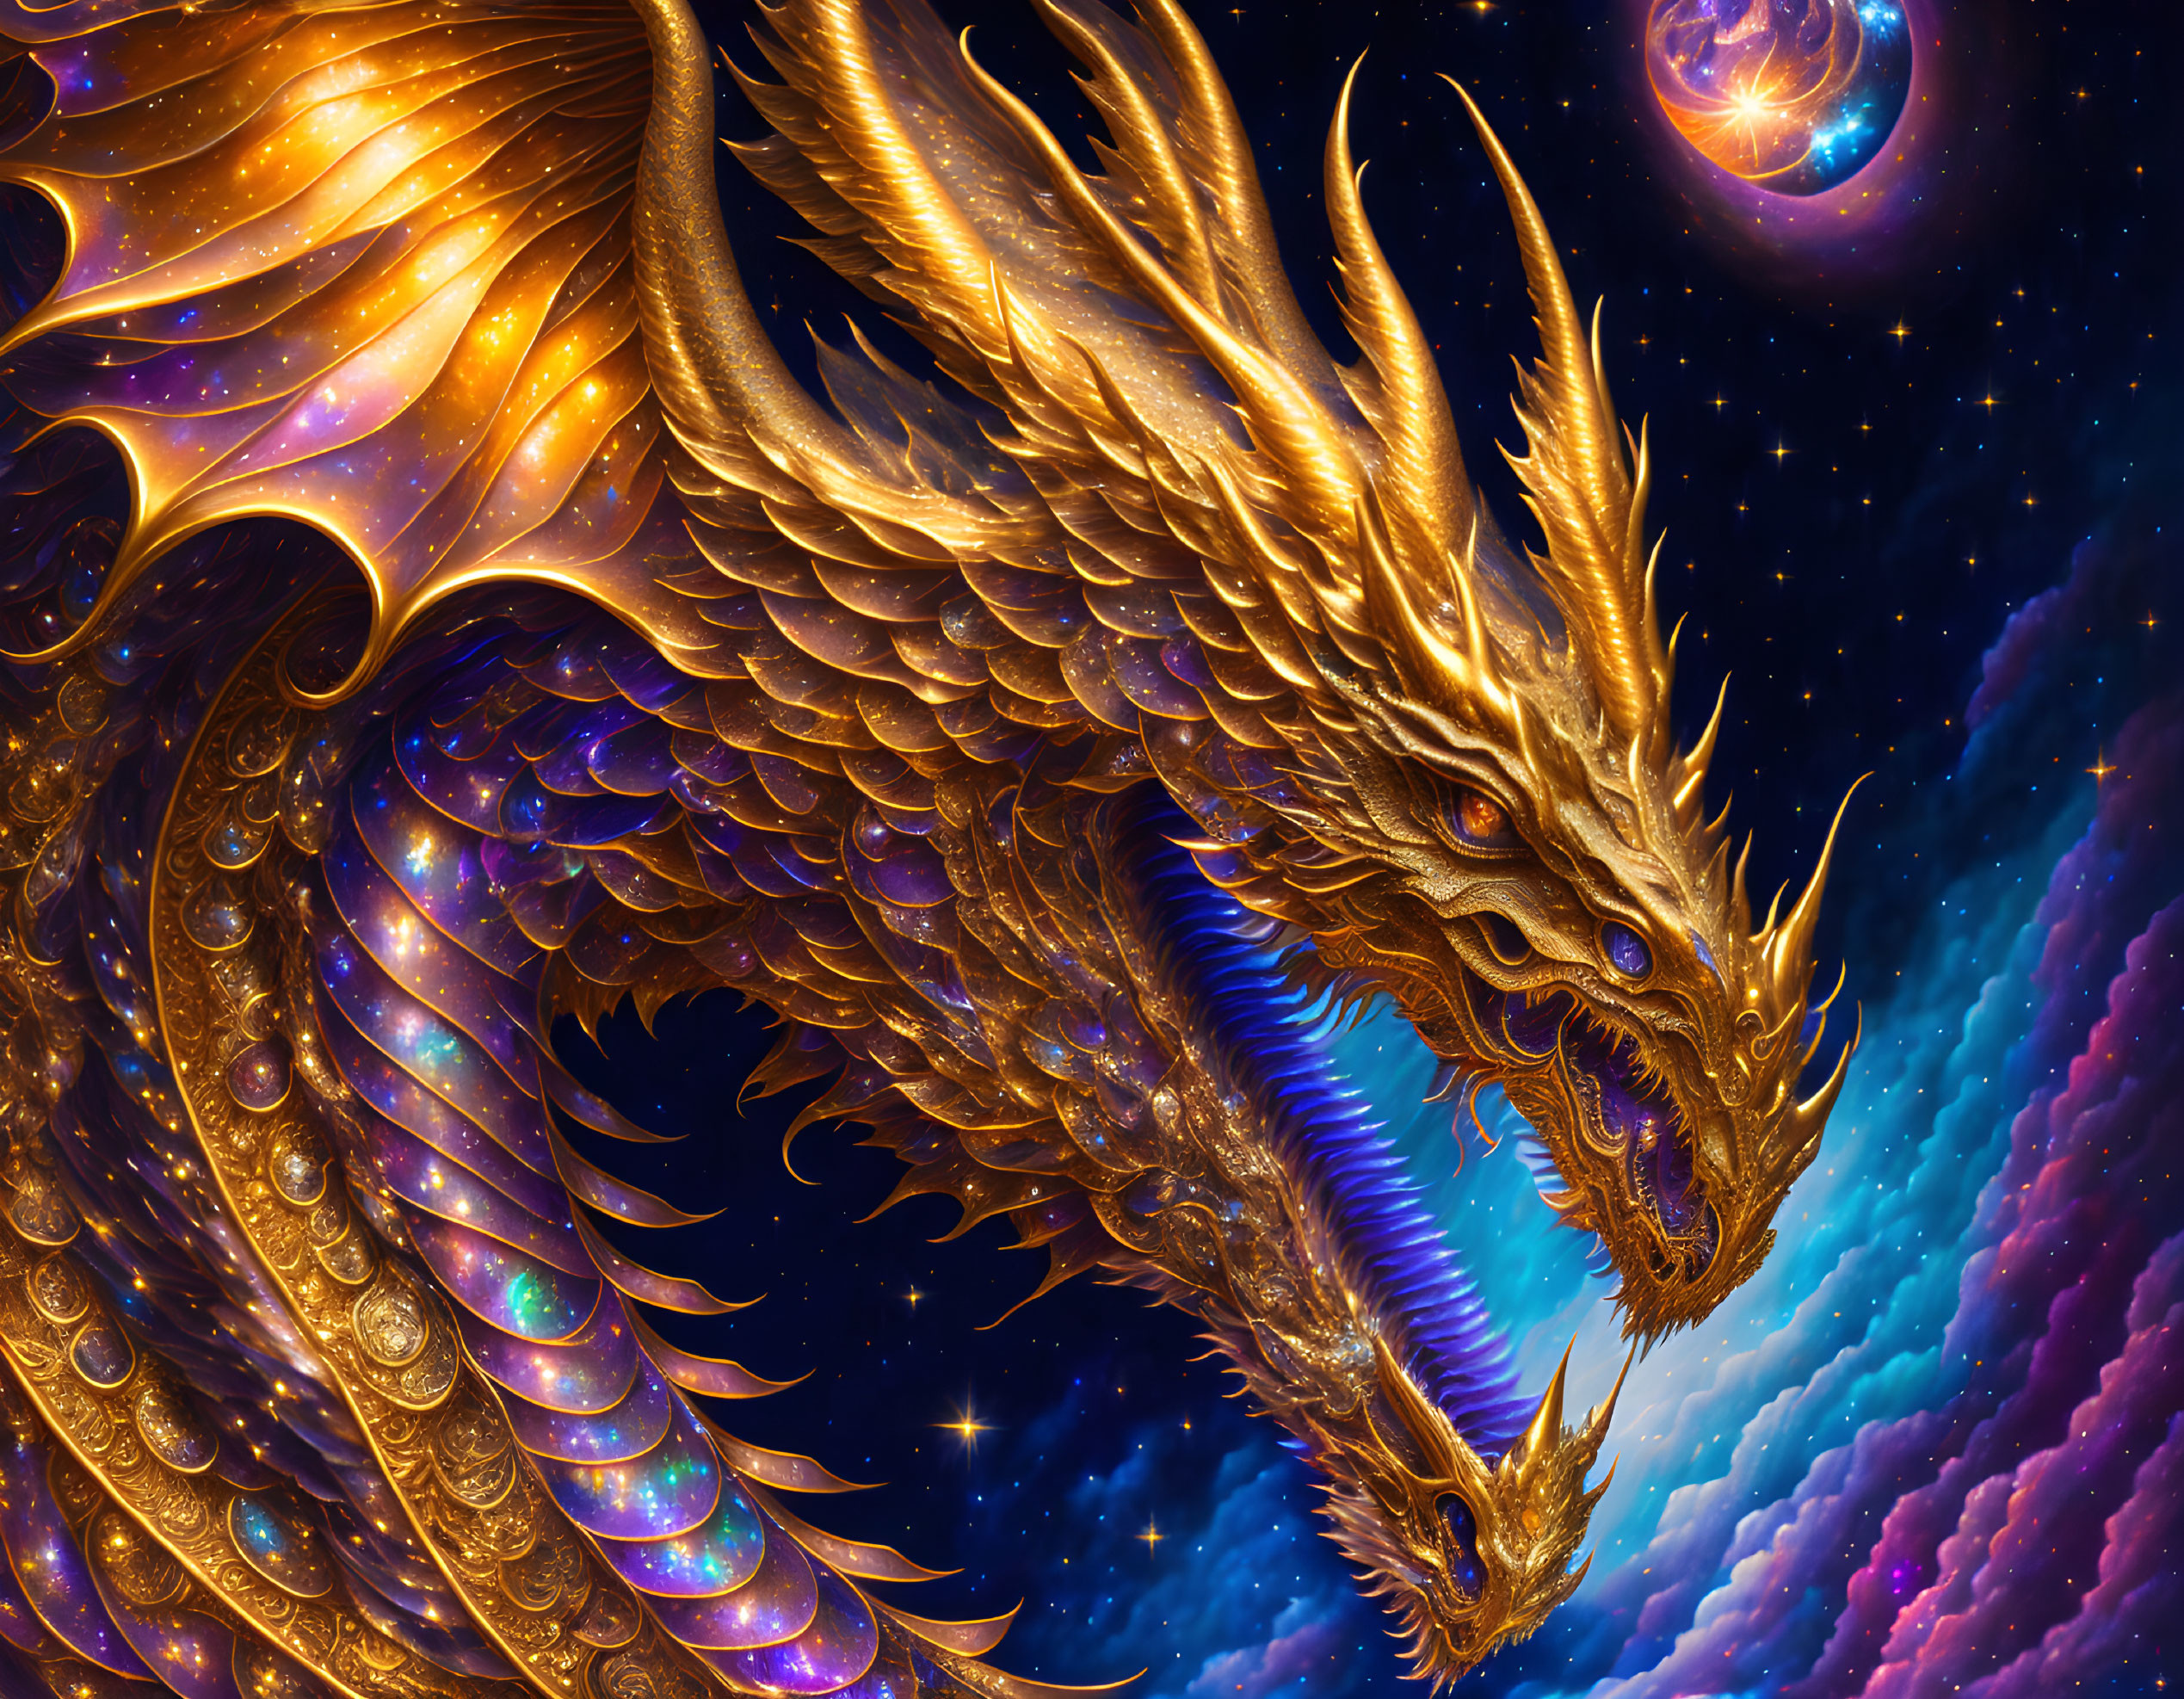 Queen Gold Dragon.